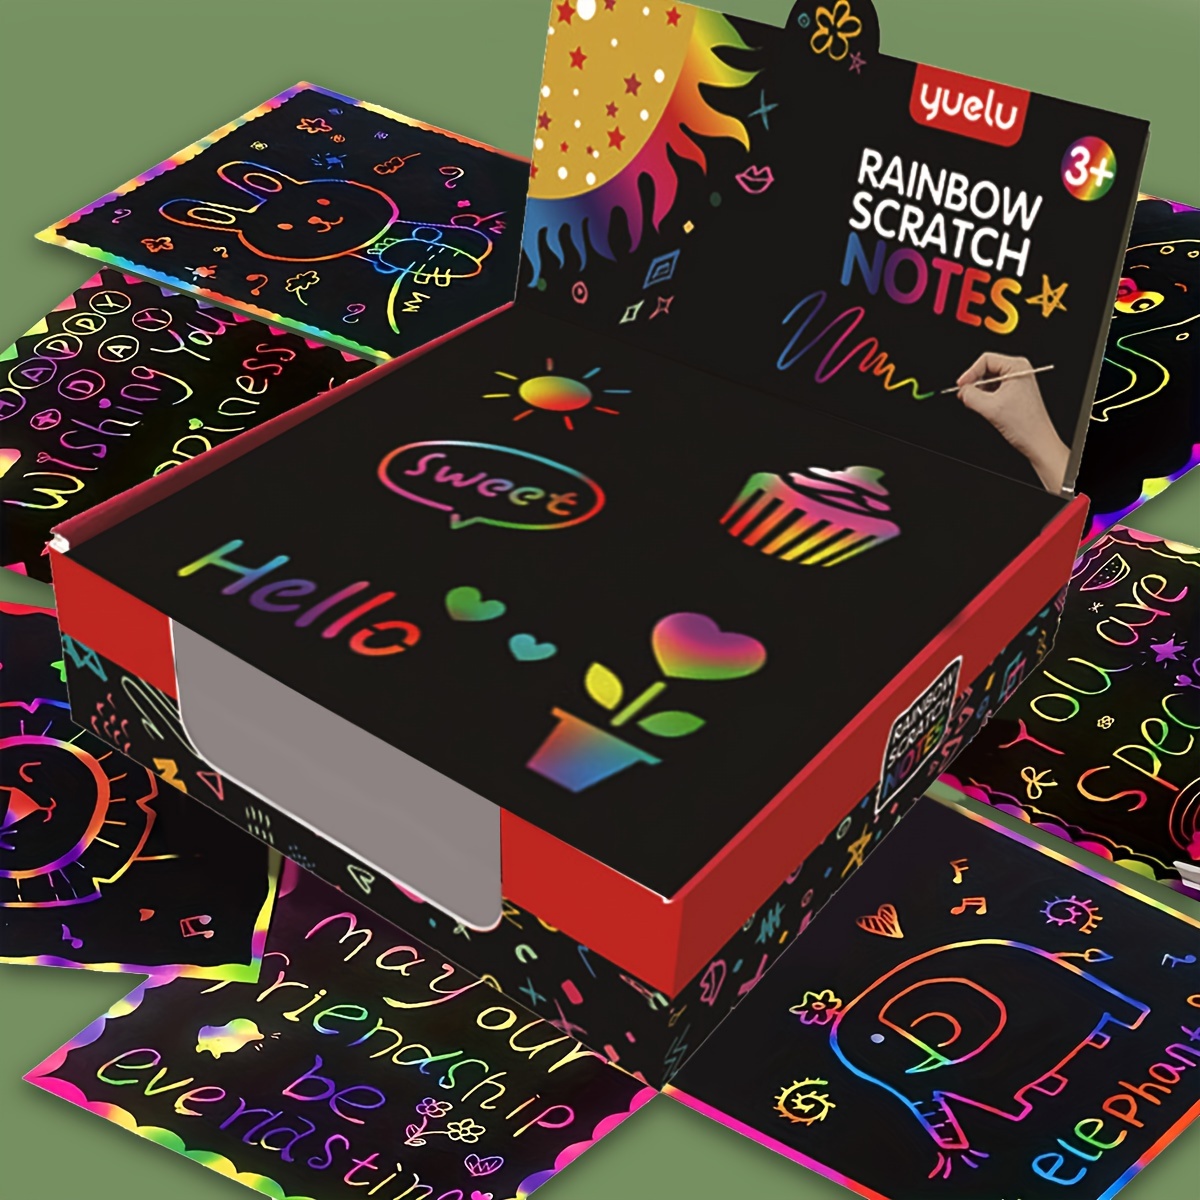 pigipigi Scratch Notes Art for Kids - 125 Mini Rainbow Scratch Paper Sheets with 5 Styluses Magic Scratch Crafts Art Supplies Kit for Girls Boys